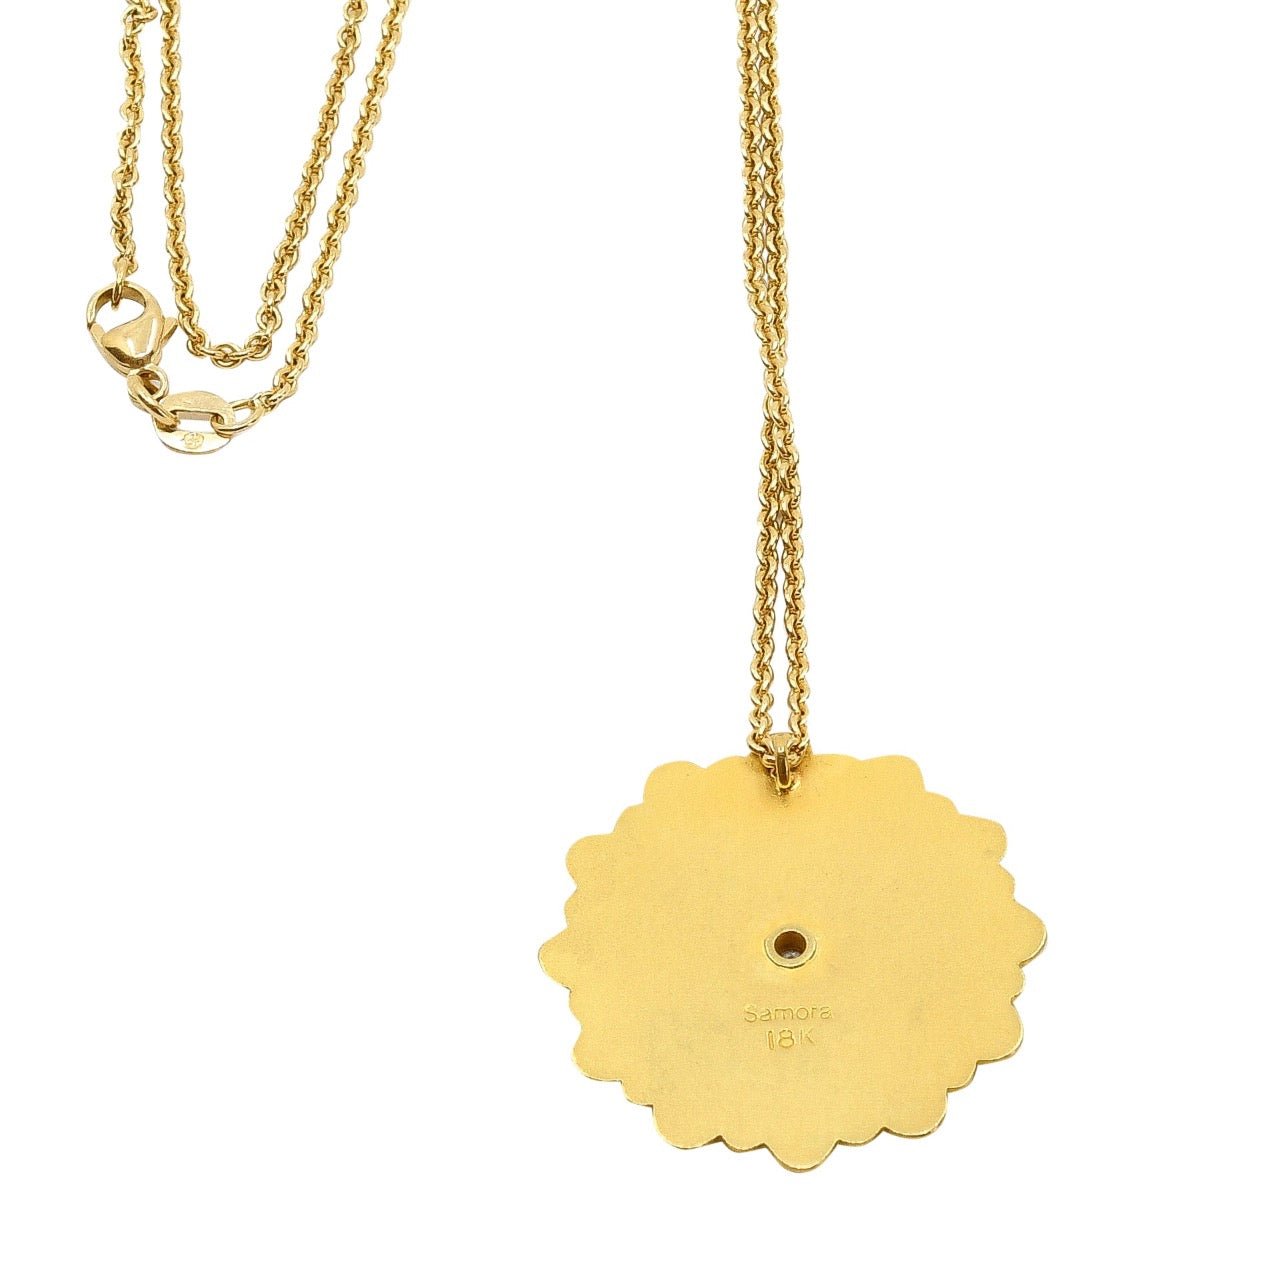 Maria Samora Necklace of 18k Gold Flower With Diamonds - Turquoise & Tufa